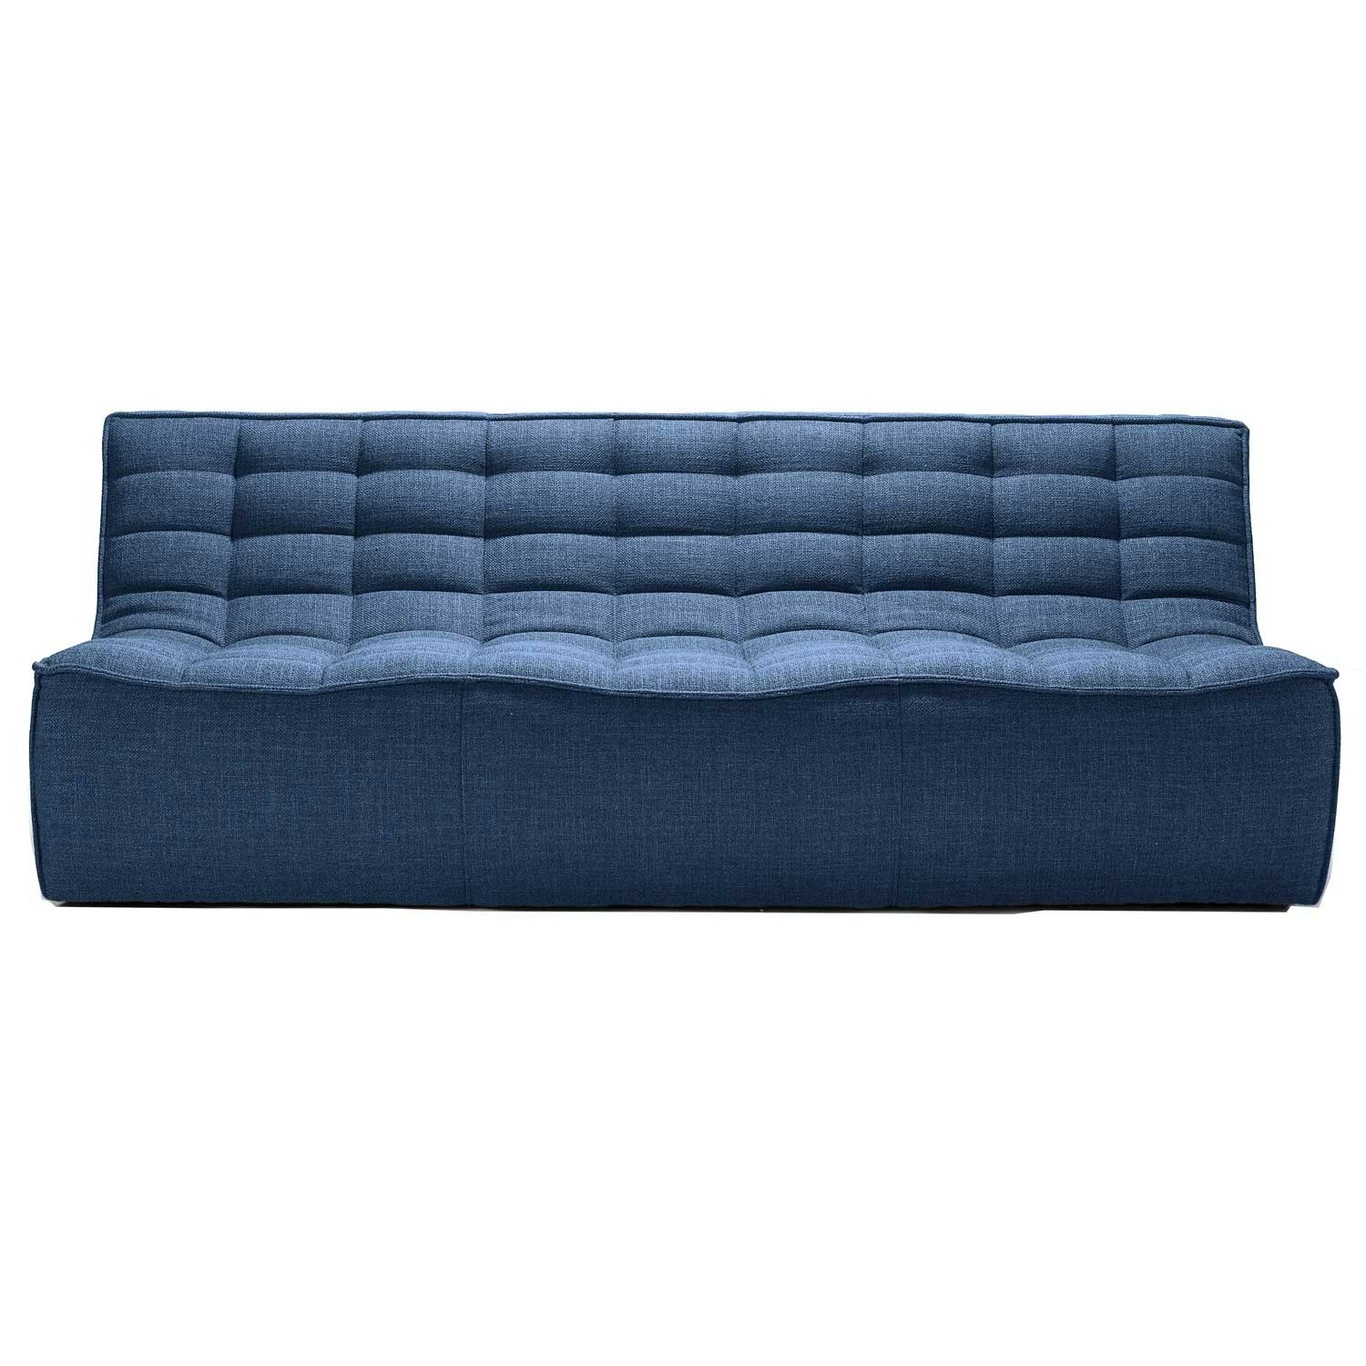 N701 Sofa, Blue 3-Seater